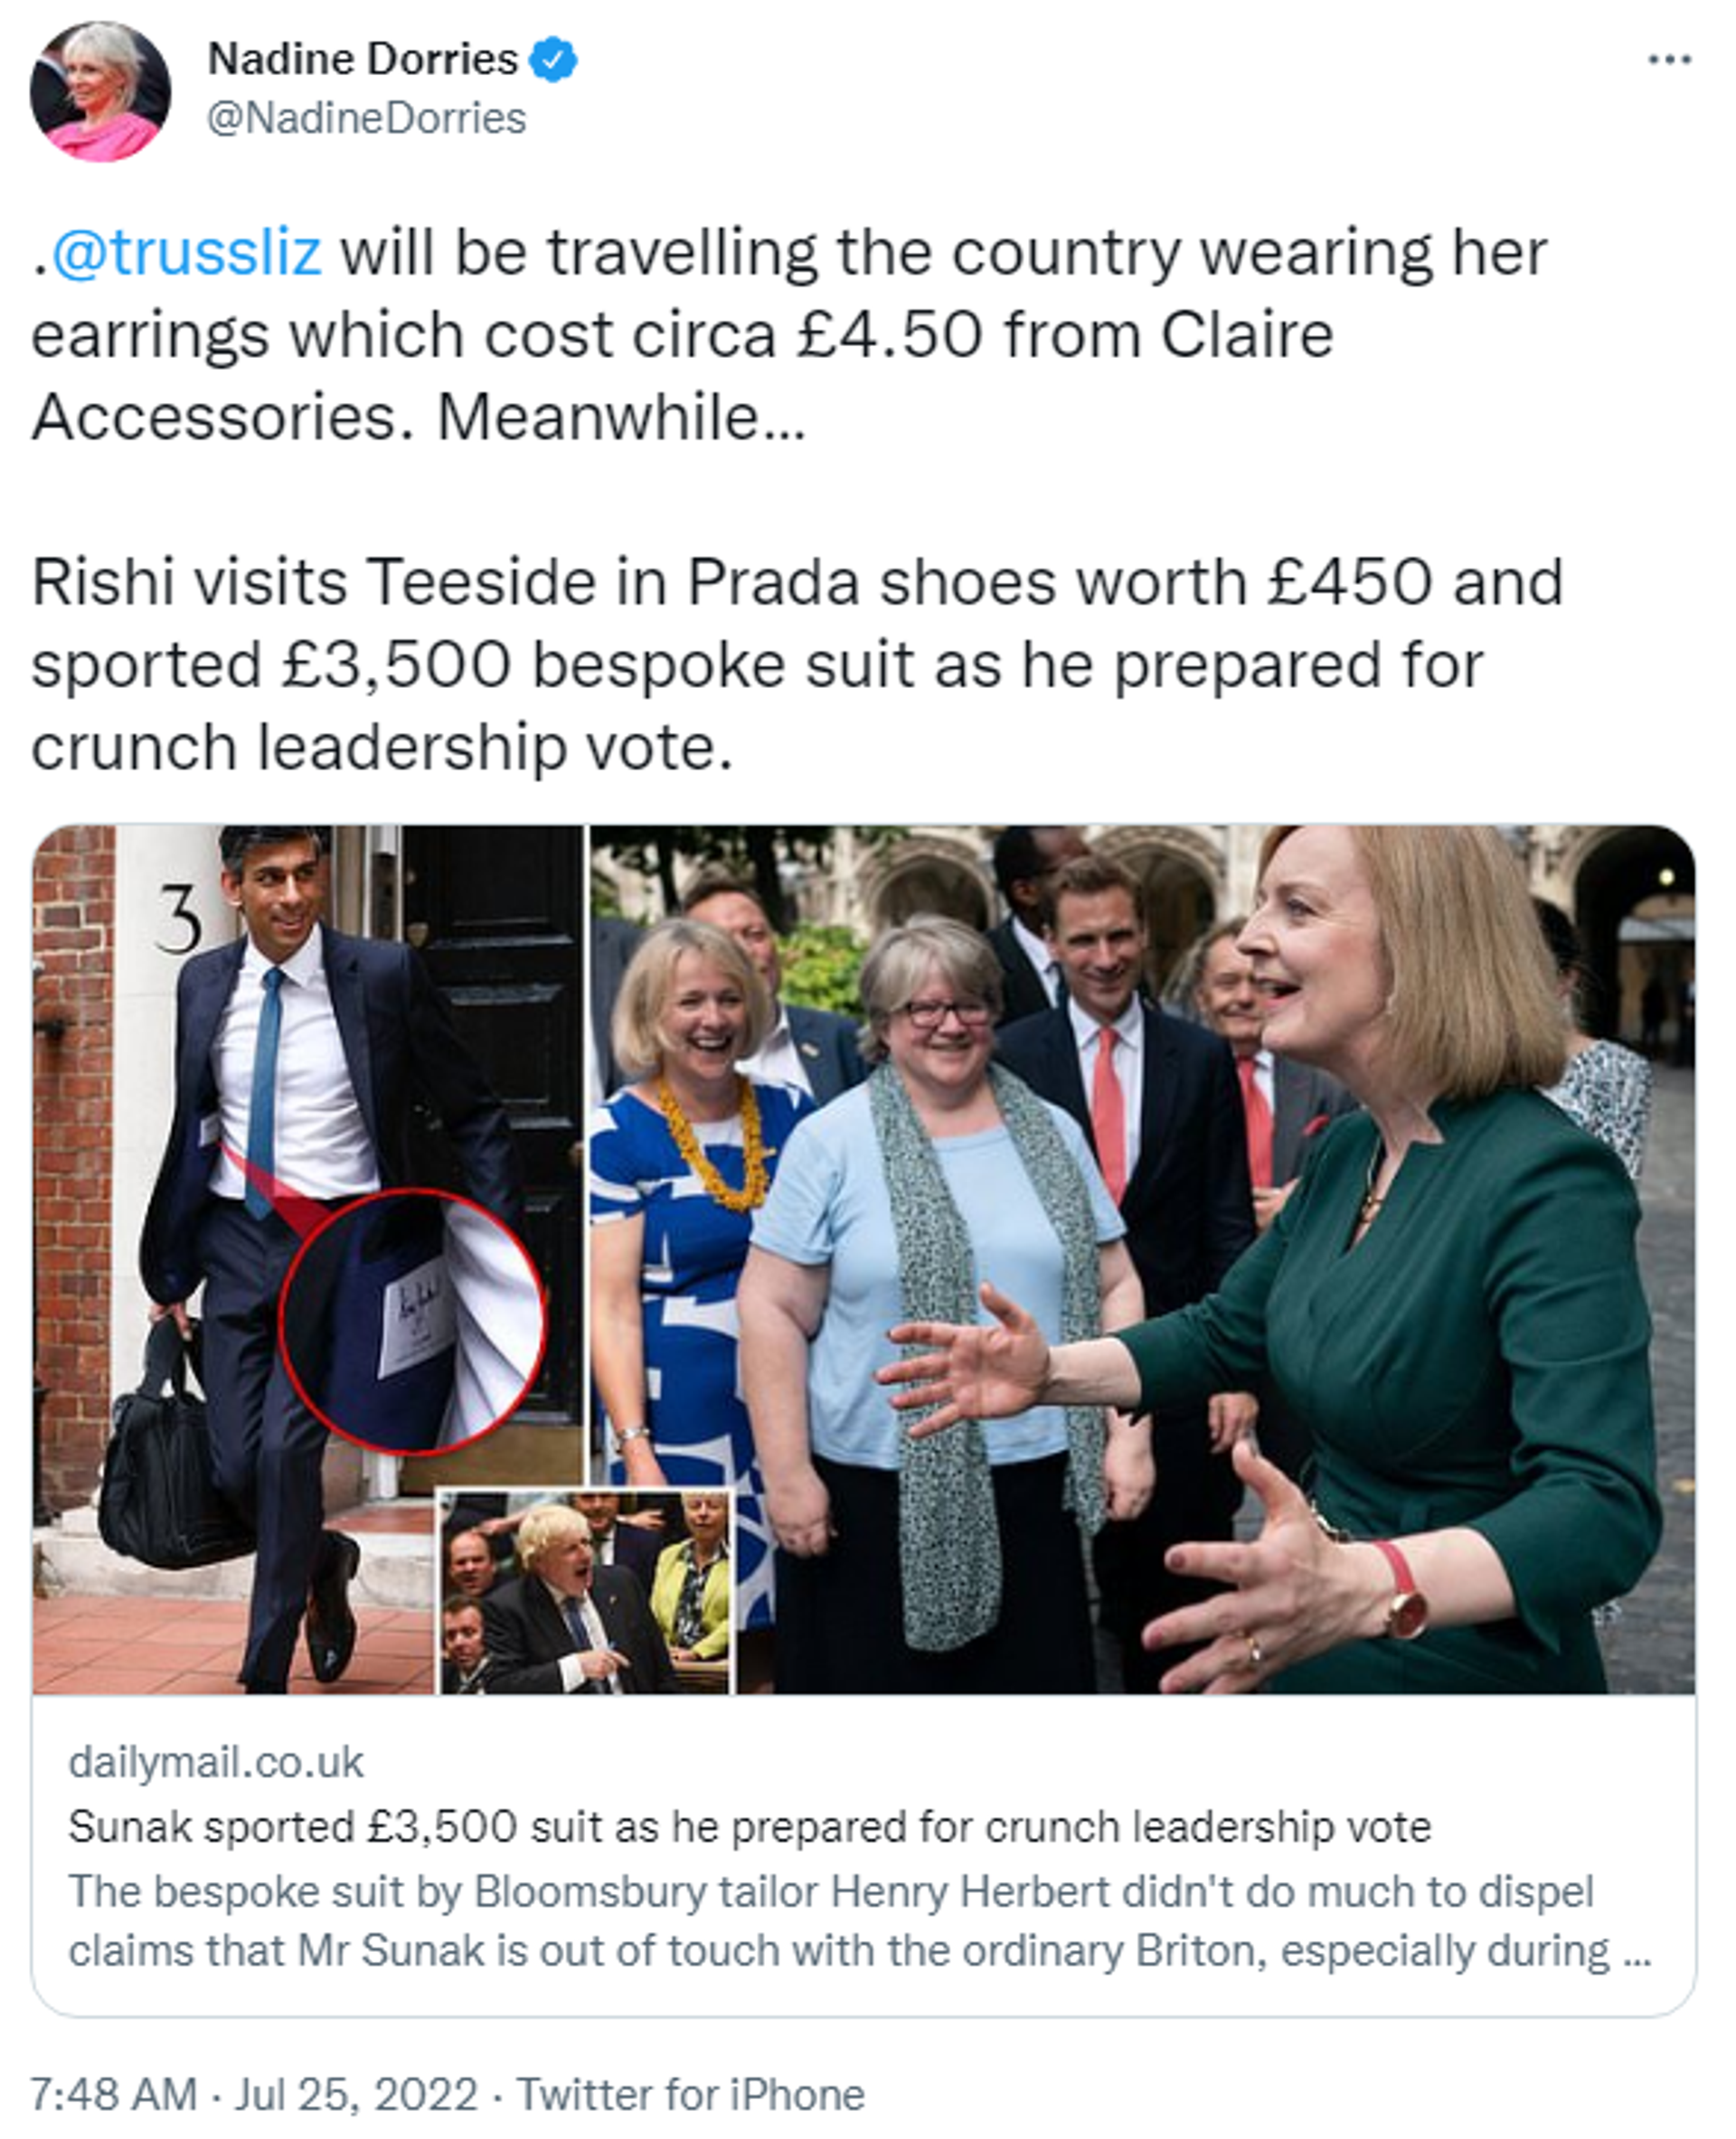 Tweet by British DCMS secretary Nadine Dorries criticising former chancellor Rishi Sunak's expensive tastes - Sputnik International, 1920, 25.07.2022